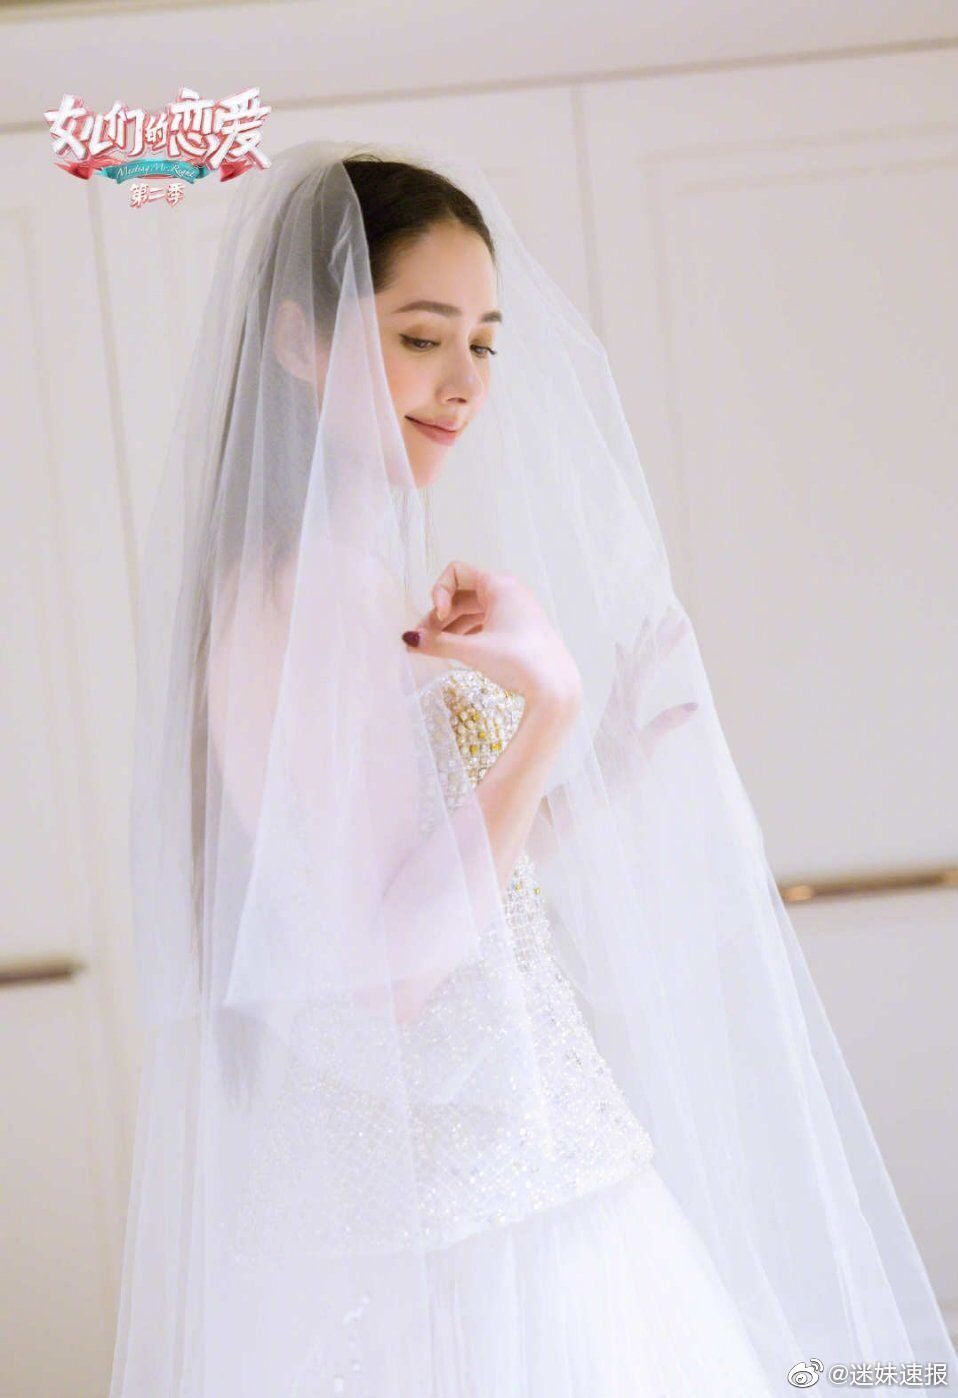 Veil, Photograph, Bridal veil, Bridal accessory, Dress, Bride, Wedding dress, Beauty, Bridal clothing, Gown, 